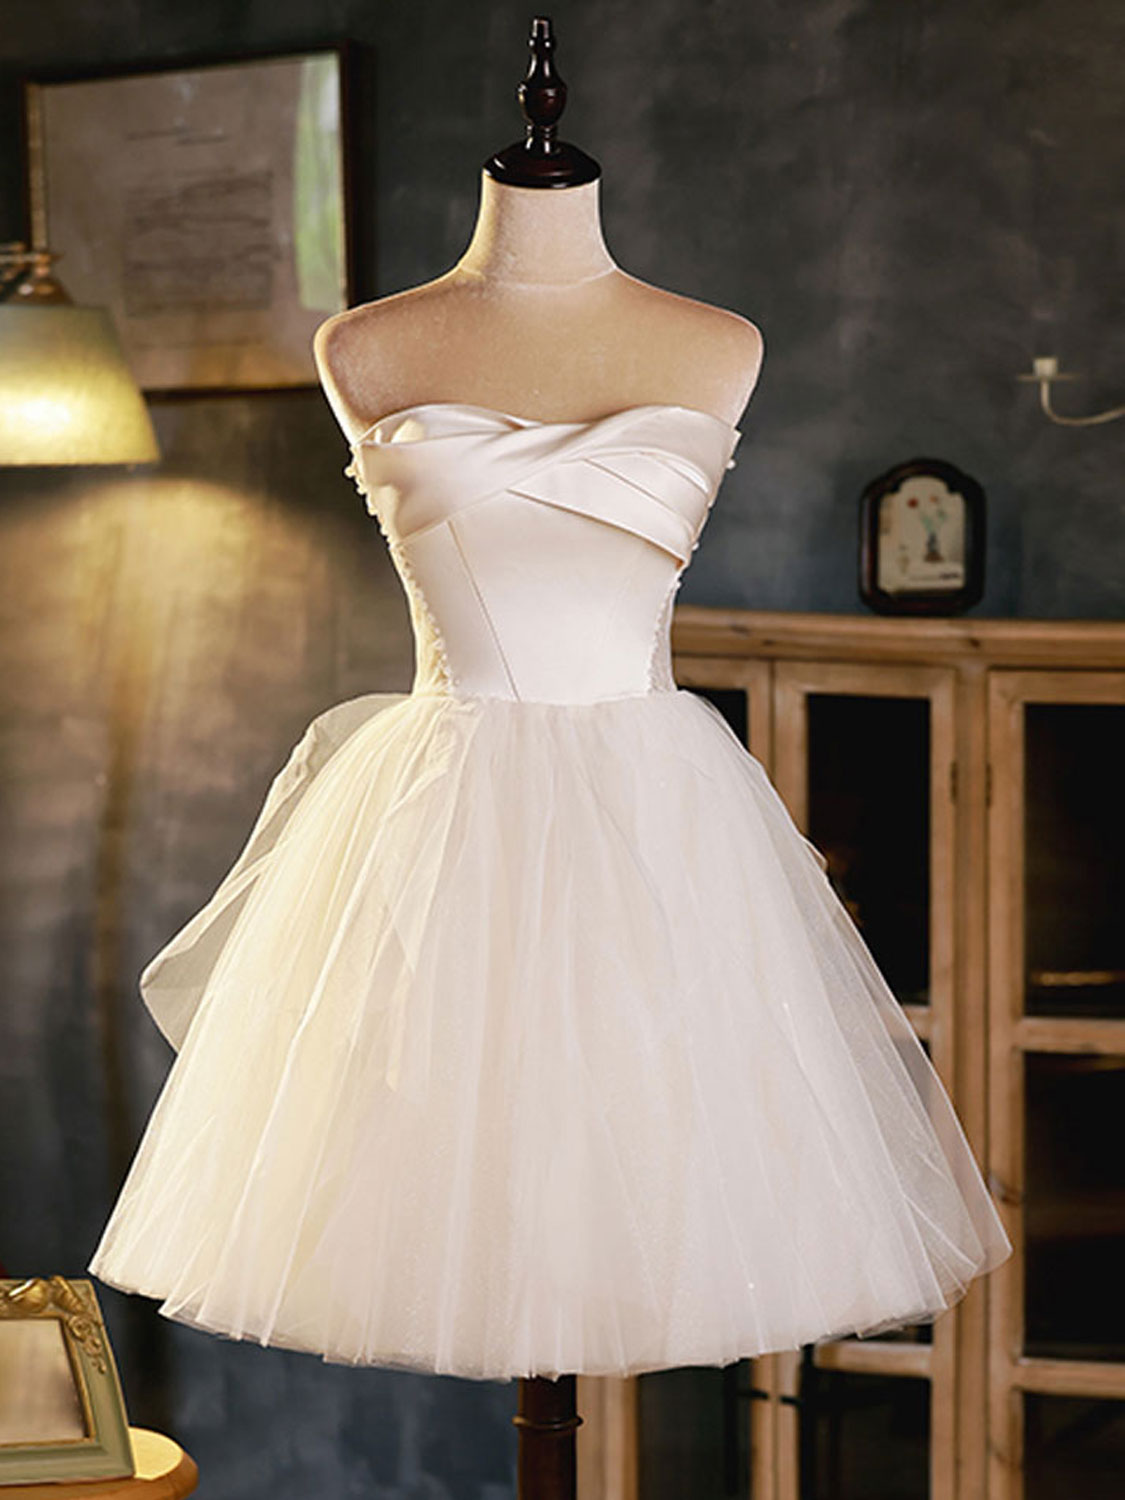 Bridesmaid Dress Summer, White Sweetheart Neck Tulle Short Prom Dress, Light Champagne Homecoming Dress